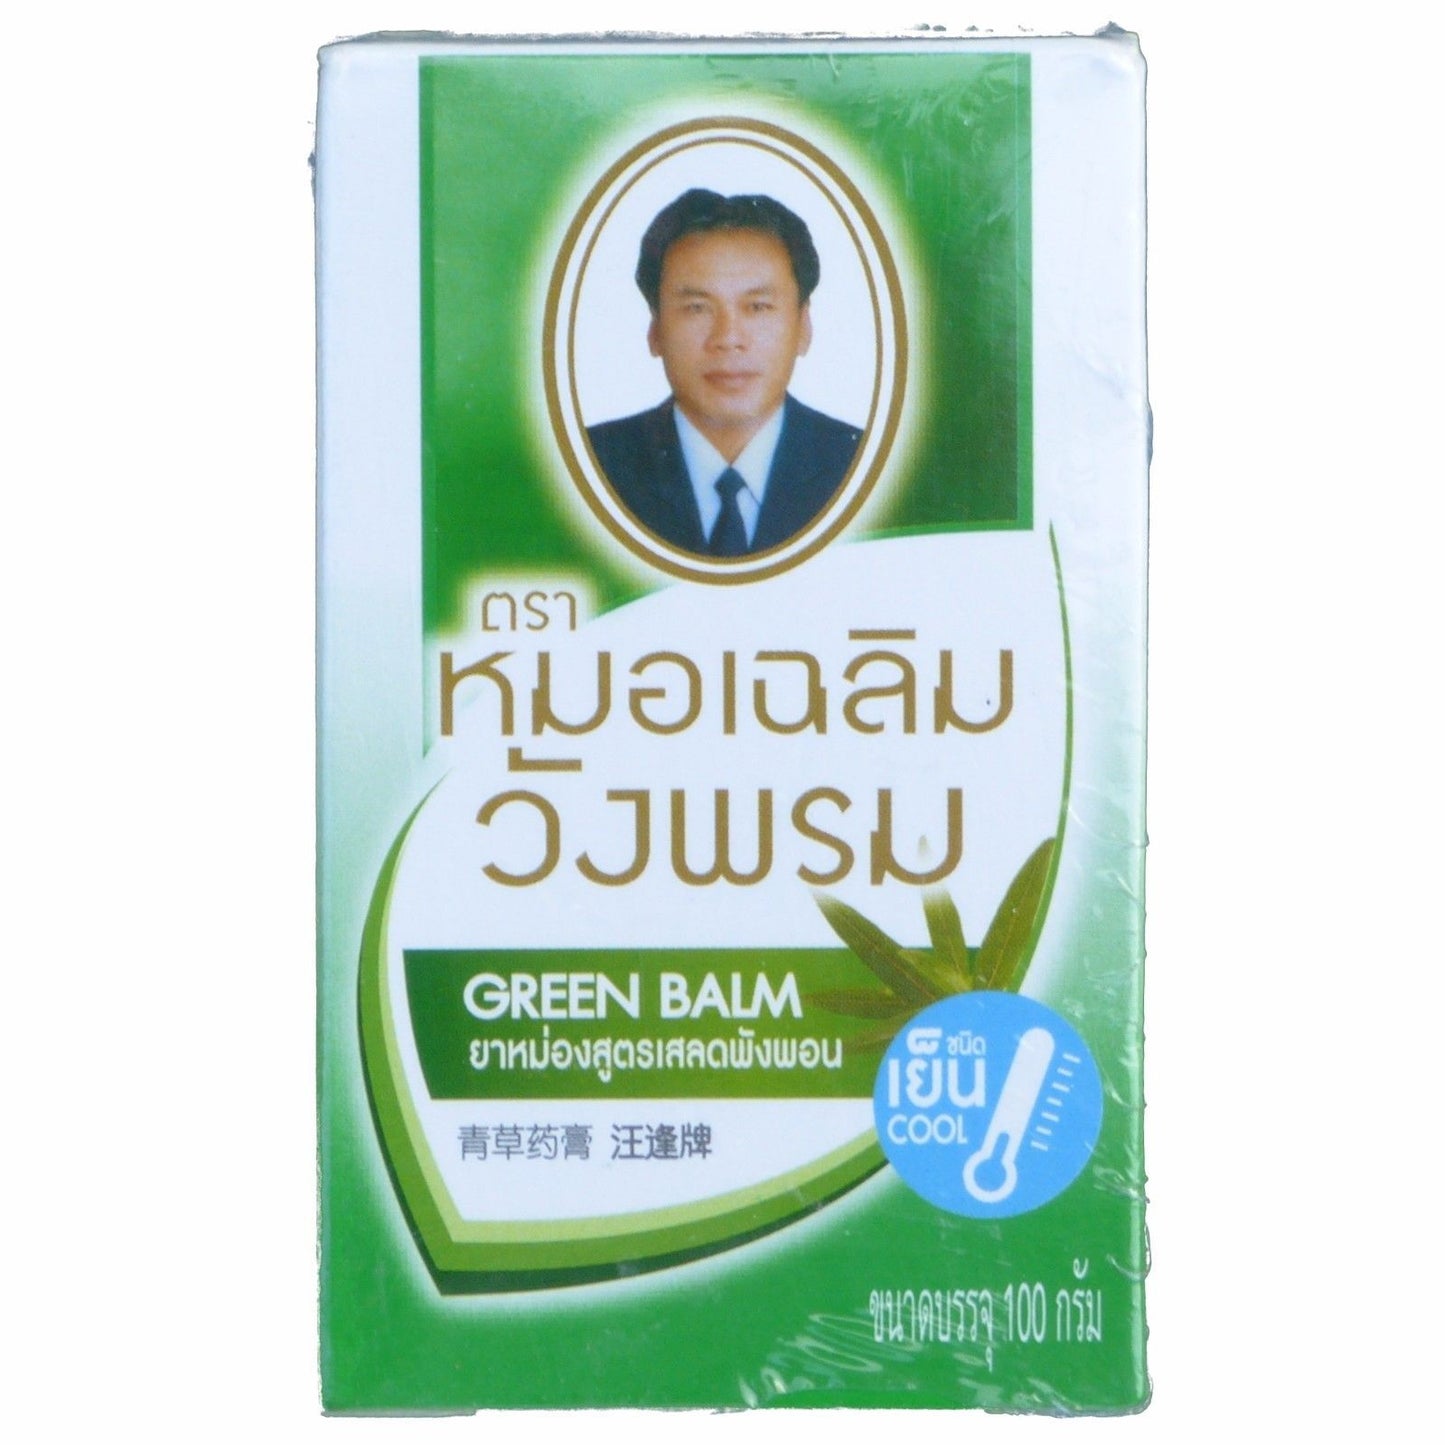 Wang Prom Barleria Lupulina Cool Green Herbal Balm 100 grams - Asian Beauty Supply